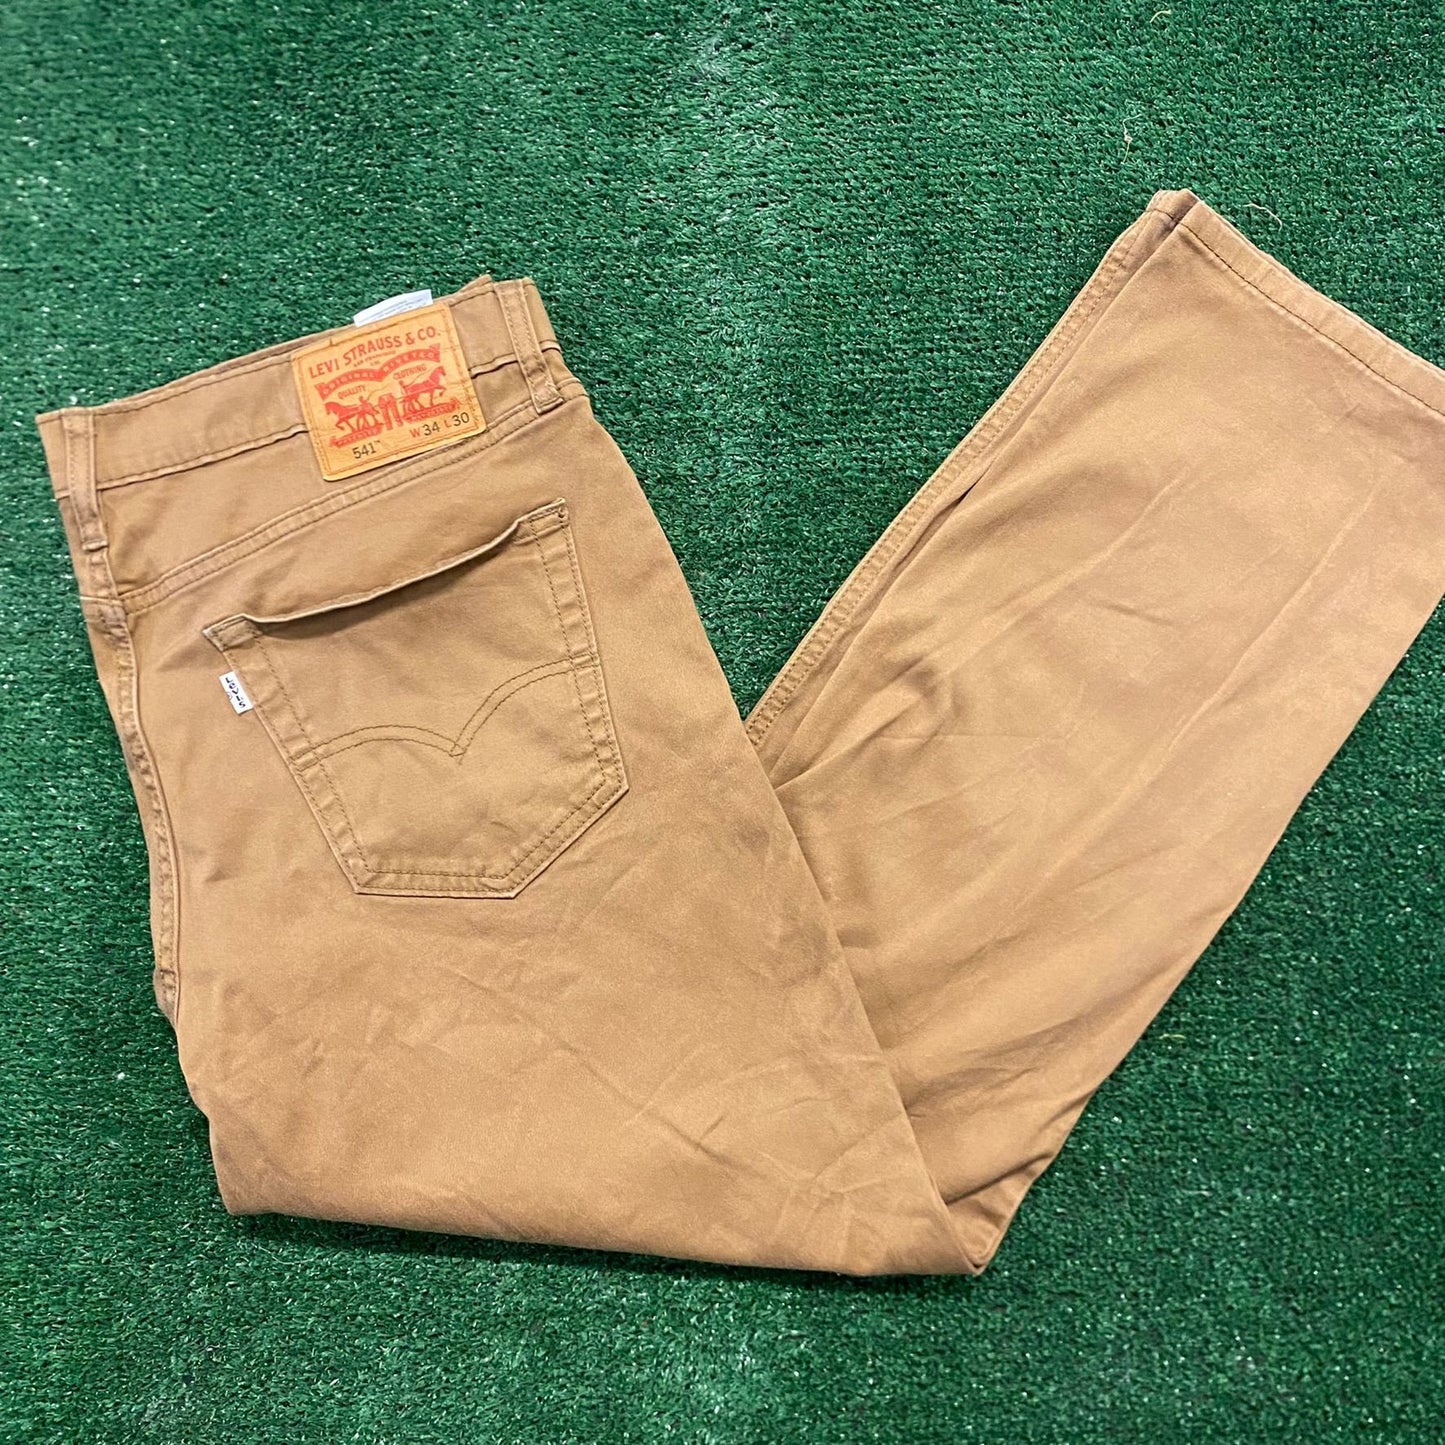 Levi's 541 Athletic Taper Fit Khakis Vintage Work Pants